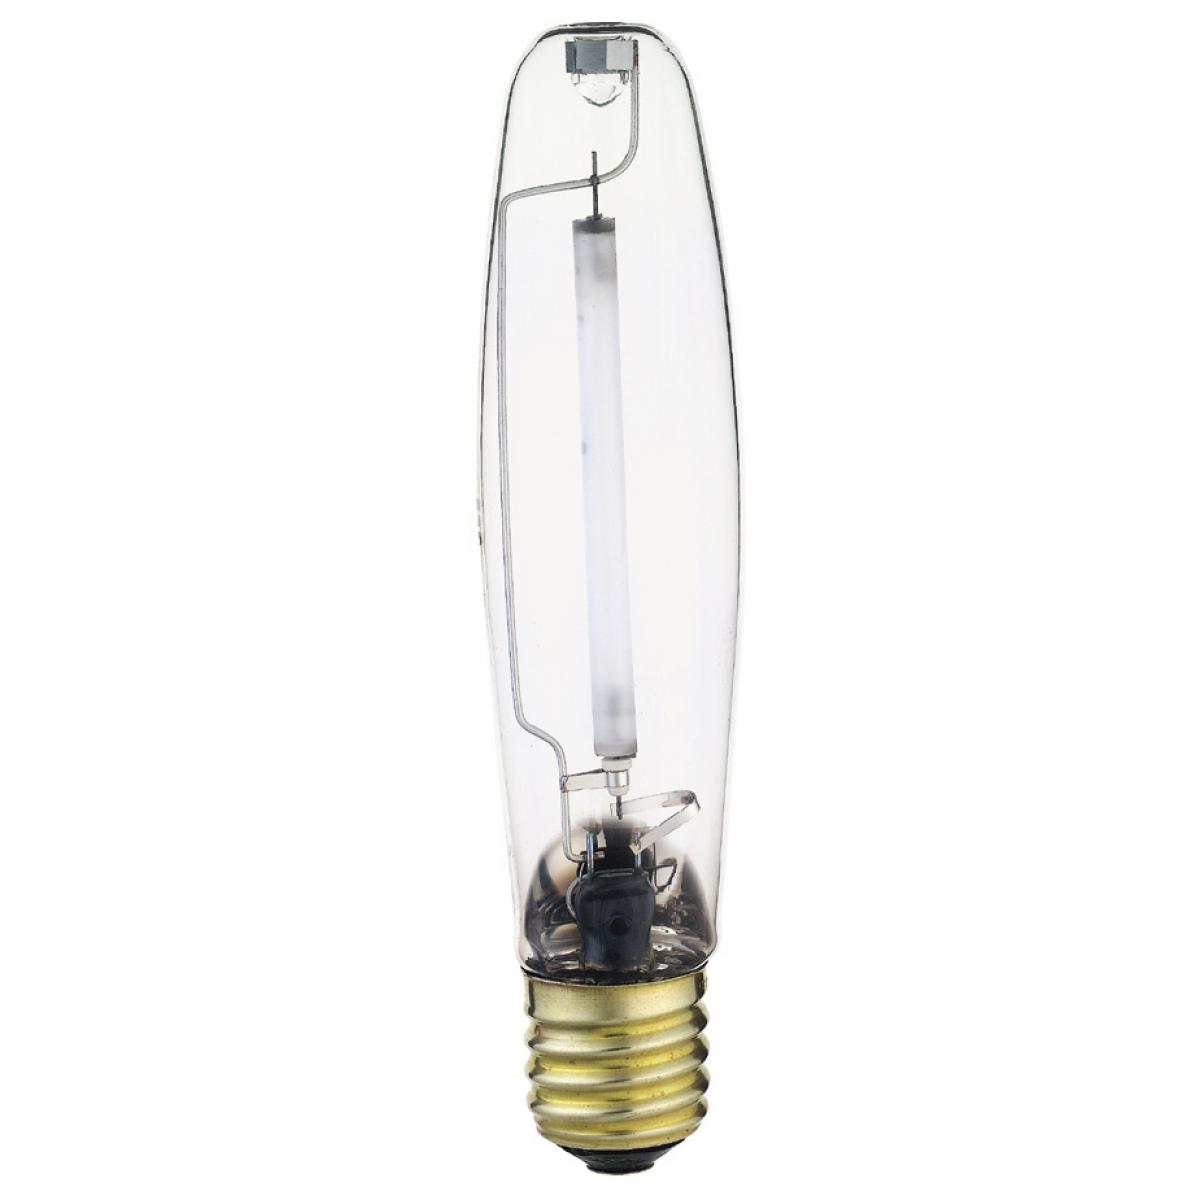 Brand New CASE of 12 High Pressure Sodium HPS 250w LU250 Mogul Light Bulb Lamp 